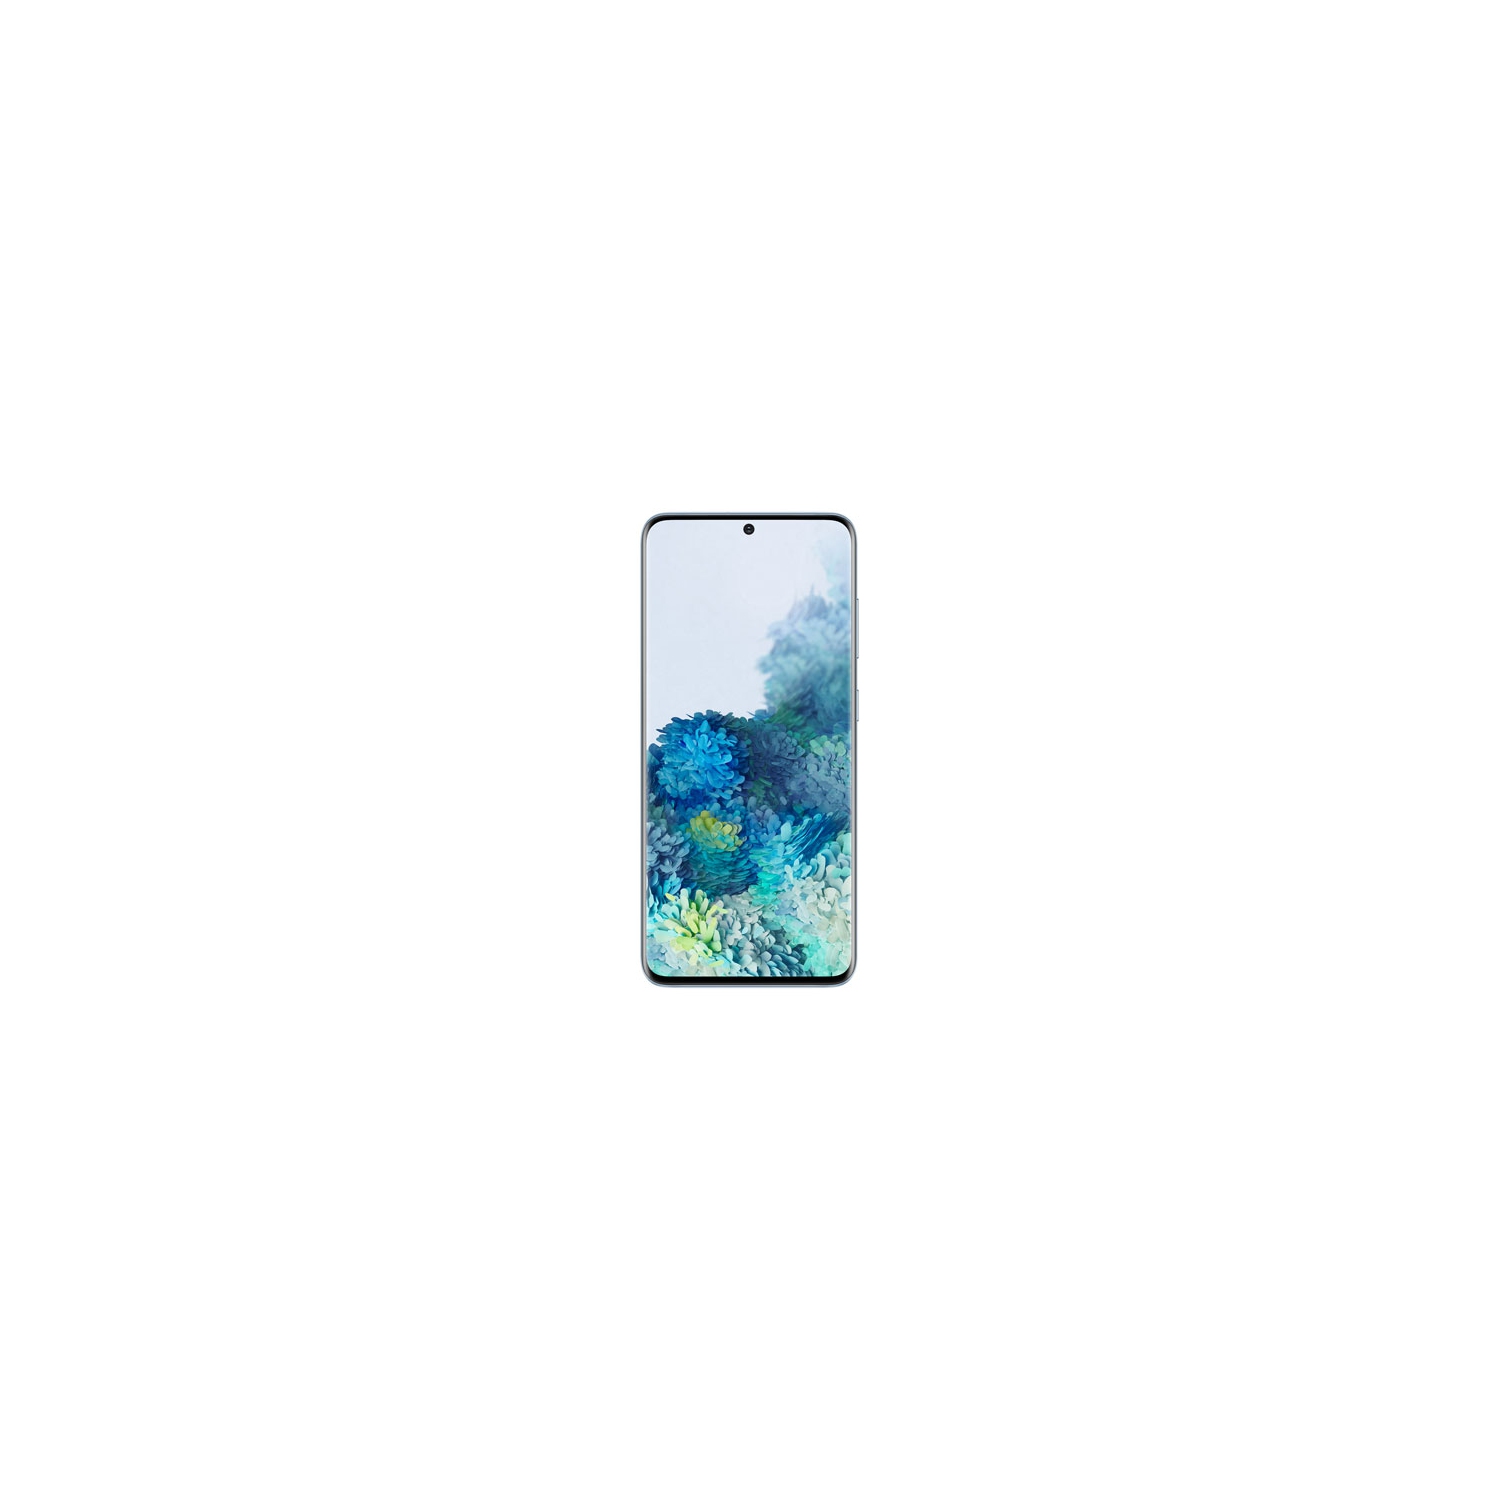 Samsung Galaxy S20 5G 128GB Smartphone - Cloud Blue - Unlocked - Open Box